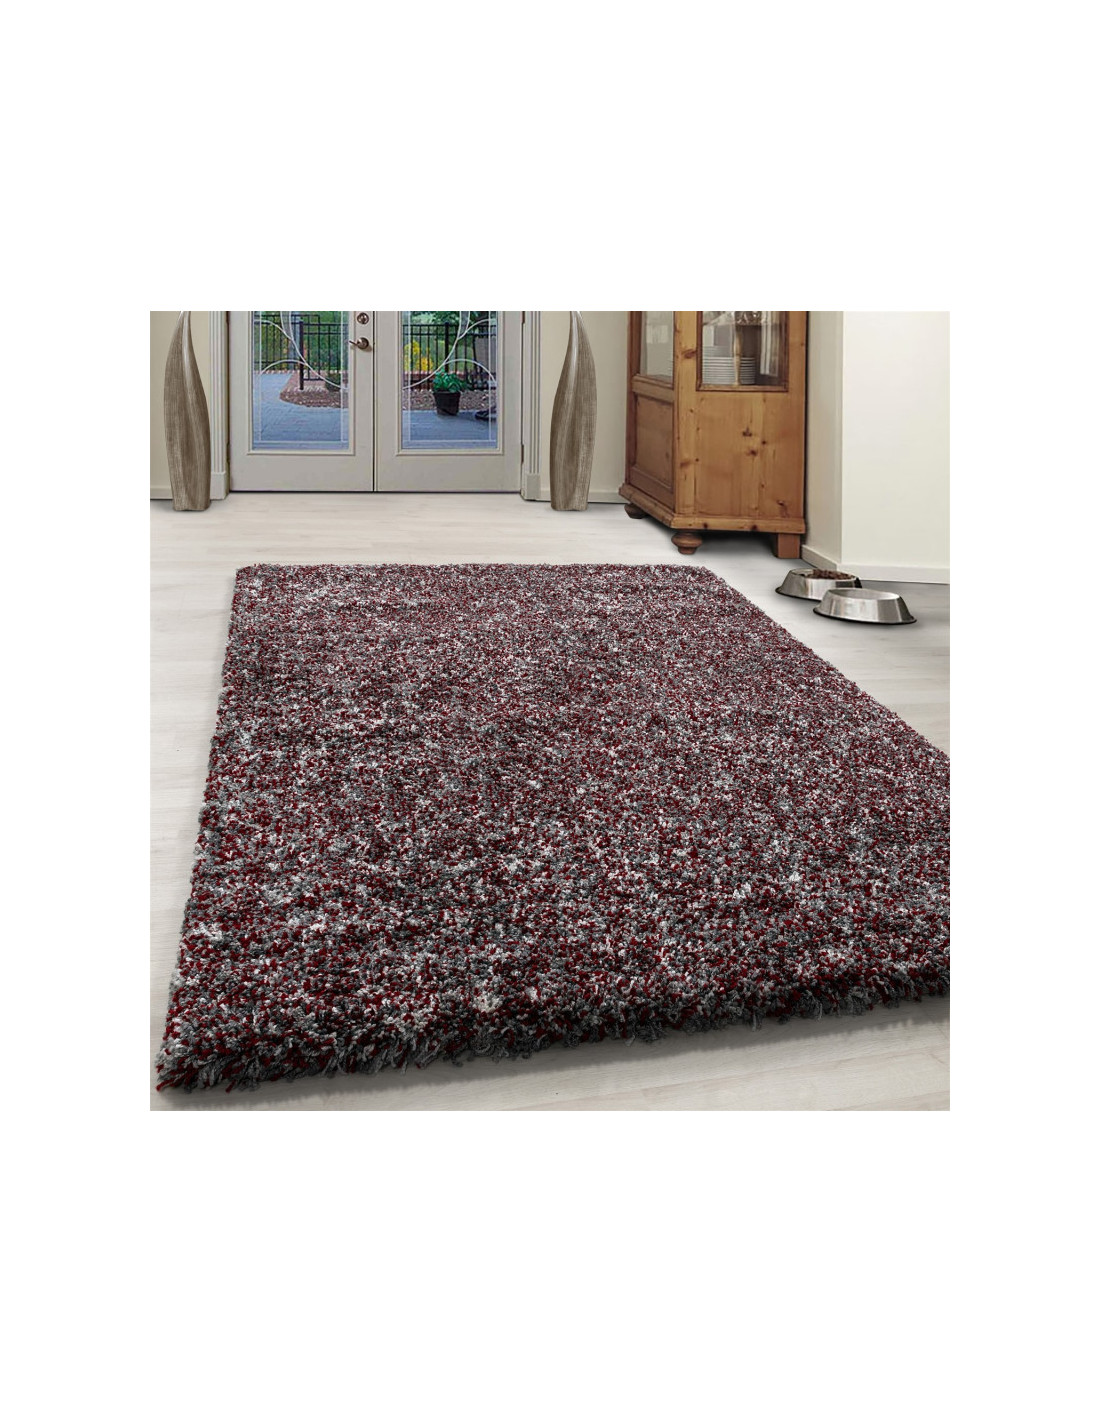 Sala de estar alfombra peluda de alta calidad pelo largo pelo largo rojo blanco gris moteado